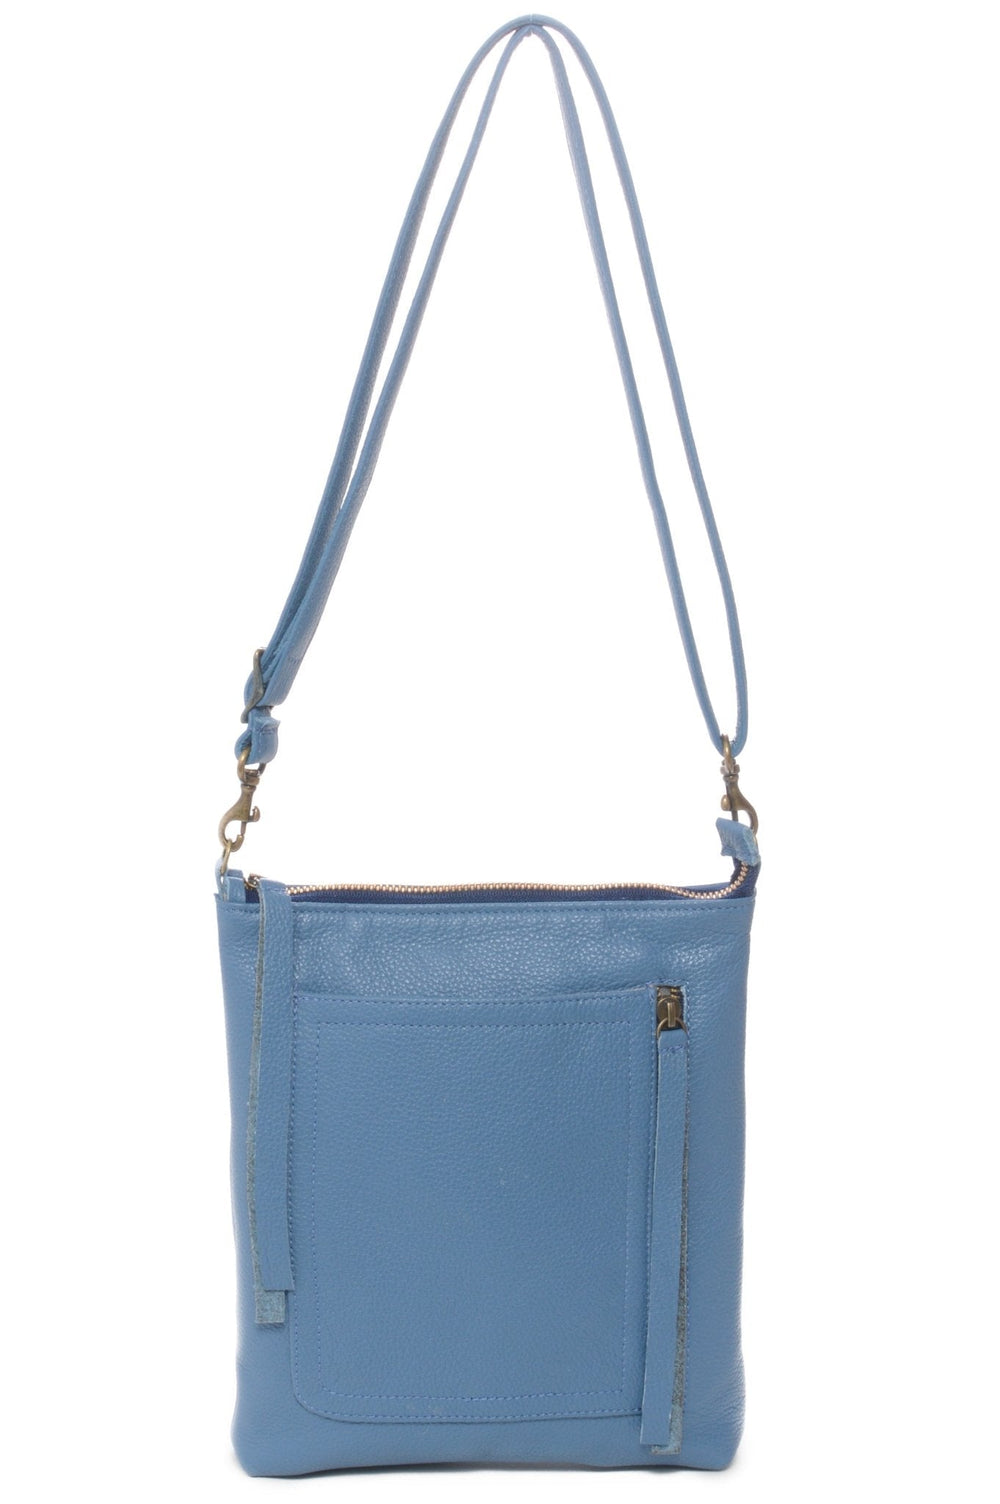 EMMA Aqua Blue GS2 - Carla Mancini Handbags